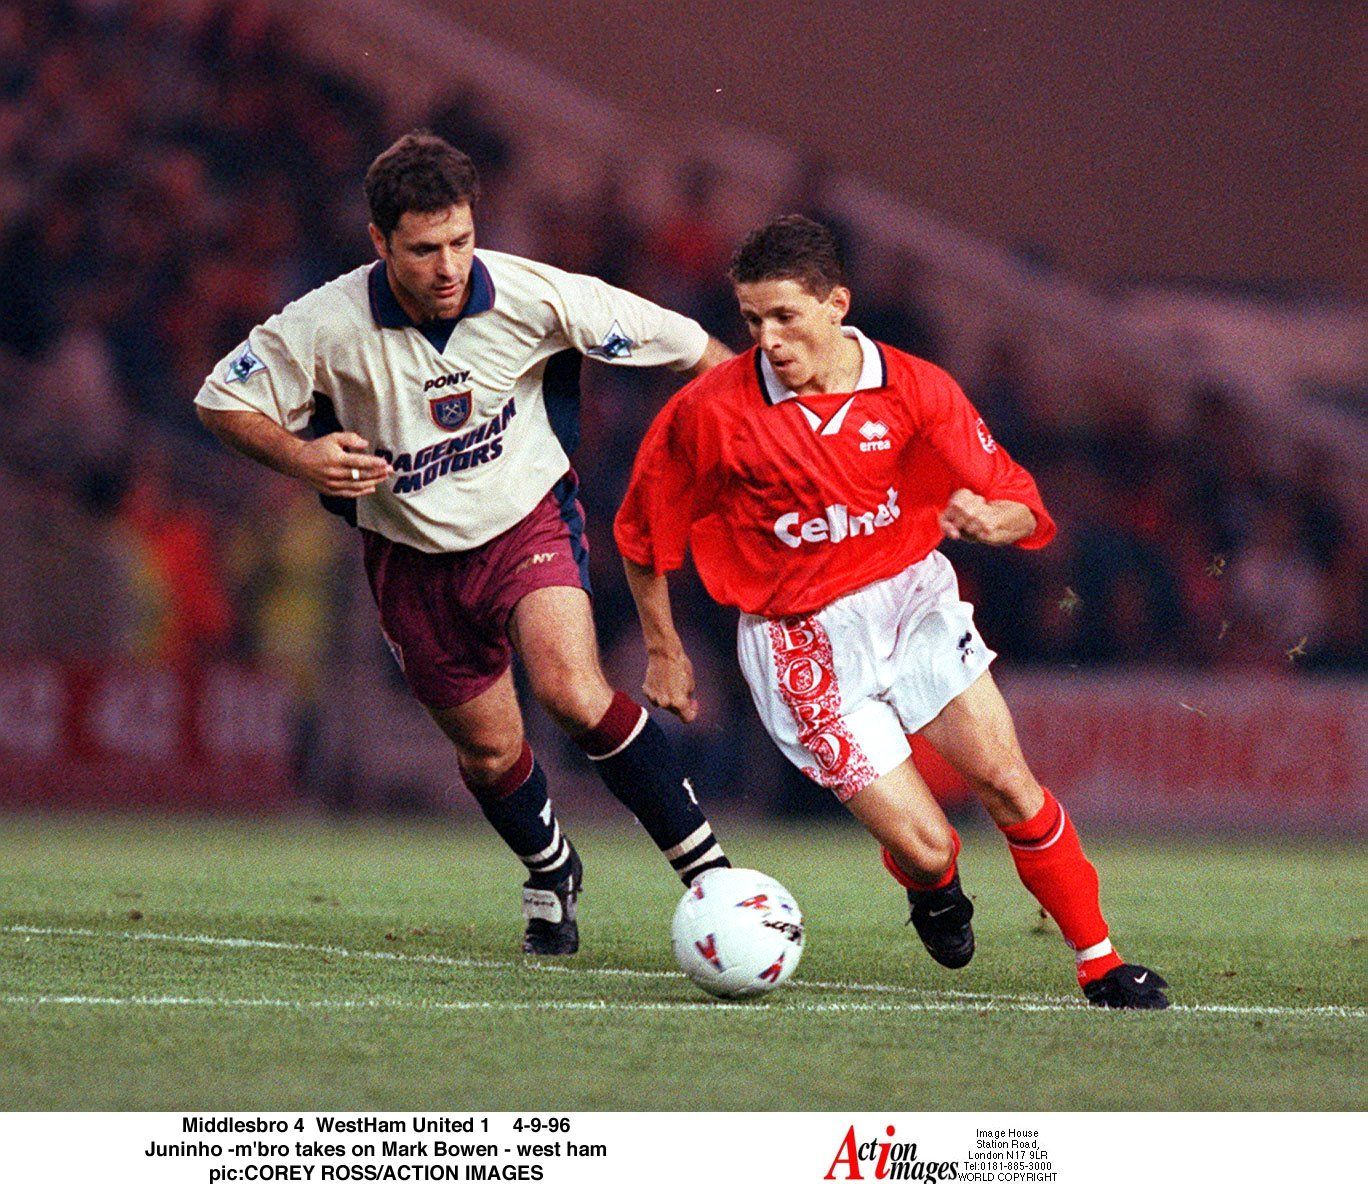 Middlesbrough 4  West Ham United 1    4-9-96 
Juninho - Middlesbrough - takes on Mark Bowen - West Ham 
      pic: Corey Ross/ Action Images